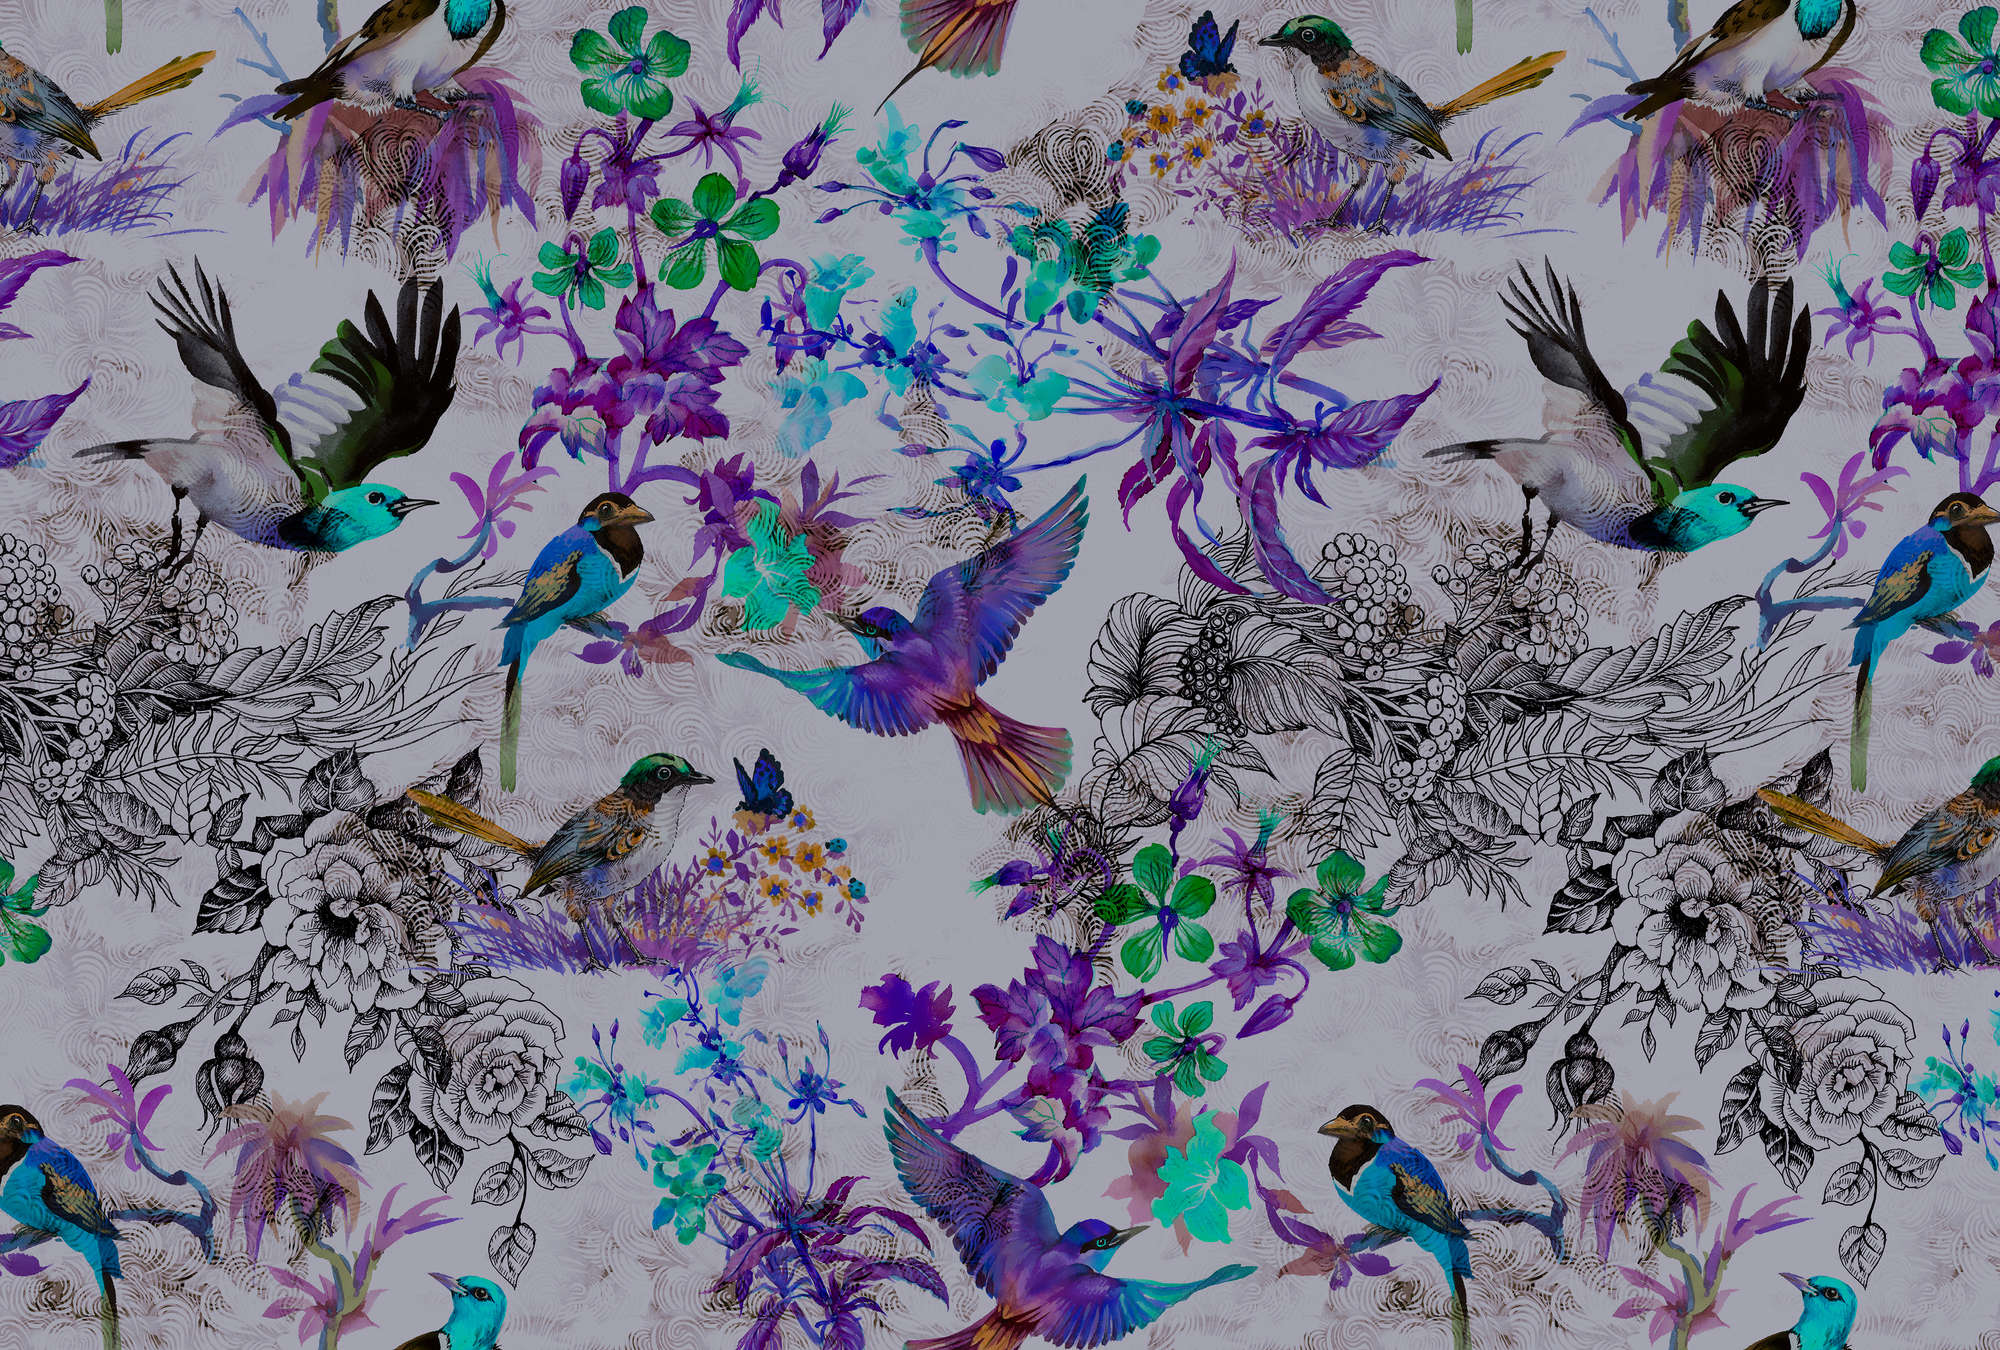             Violette Fototapete mit Blumen & Vögeln – Blau, Grau
        